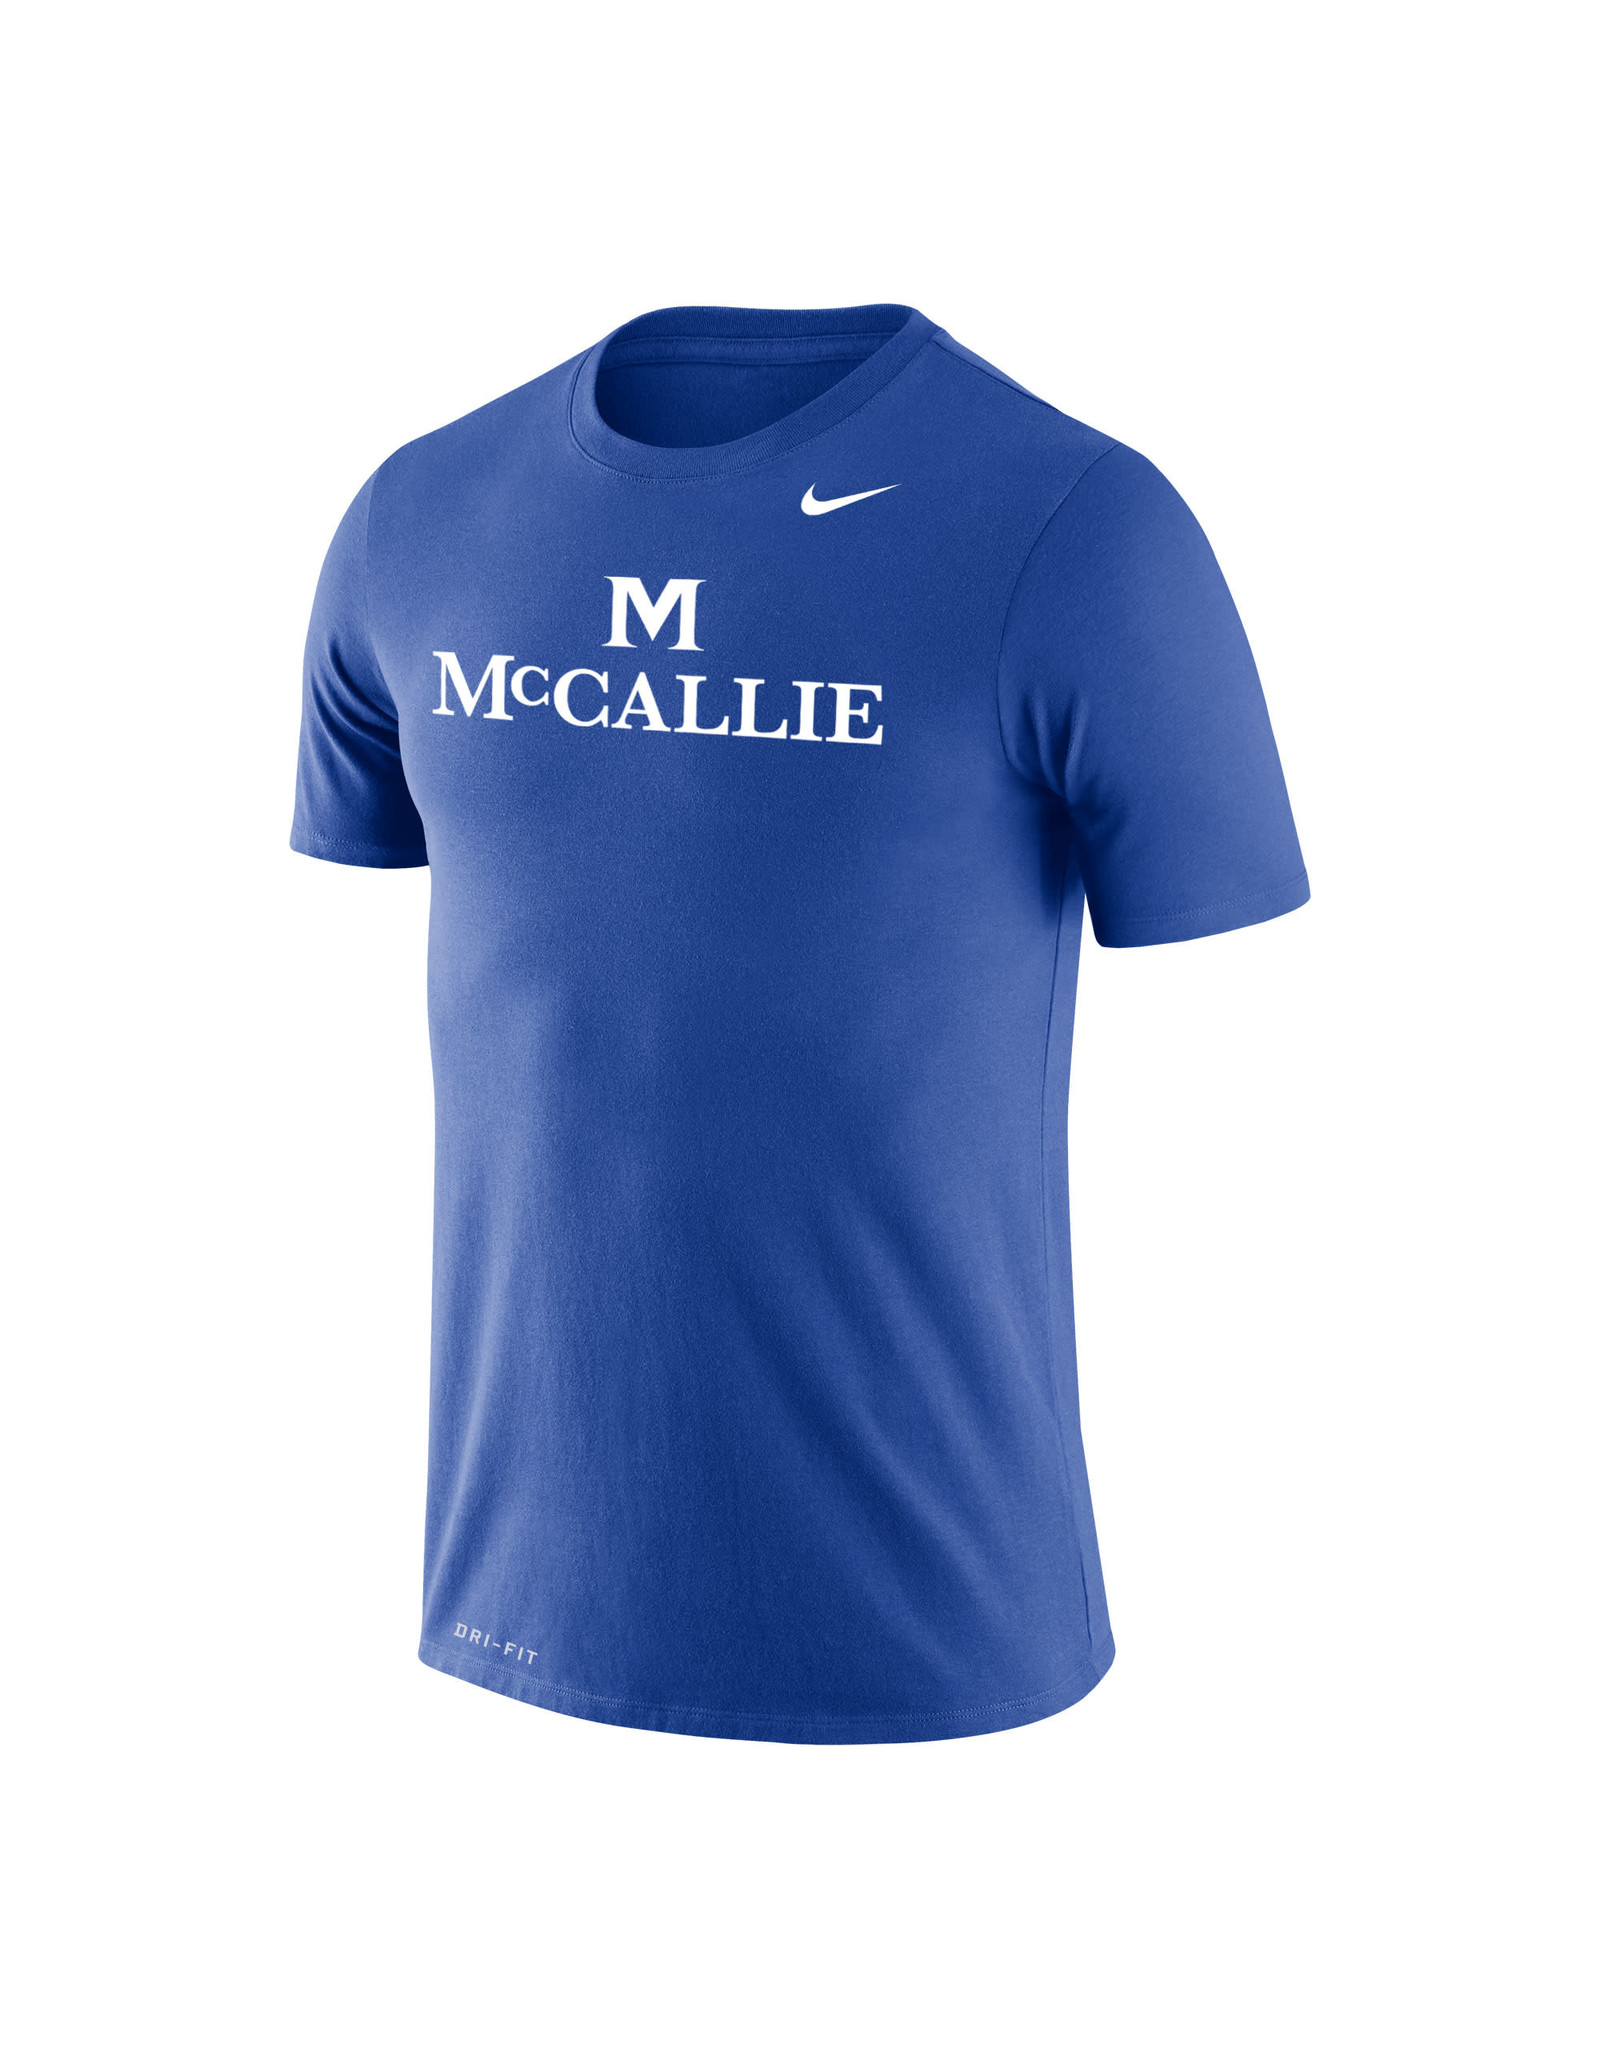 NIKE Nike Mens Legend SS Royal M McCallie